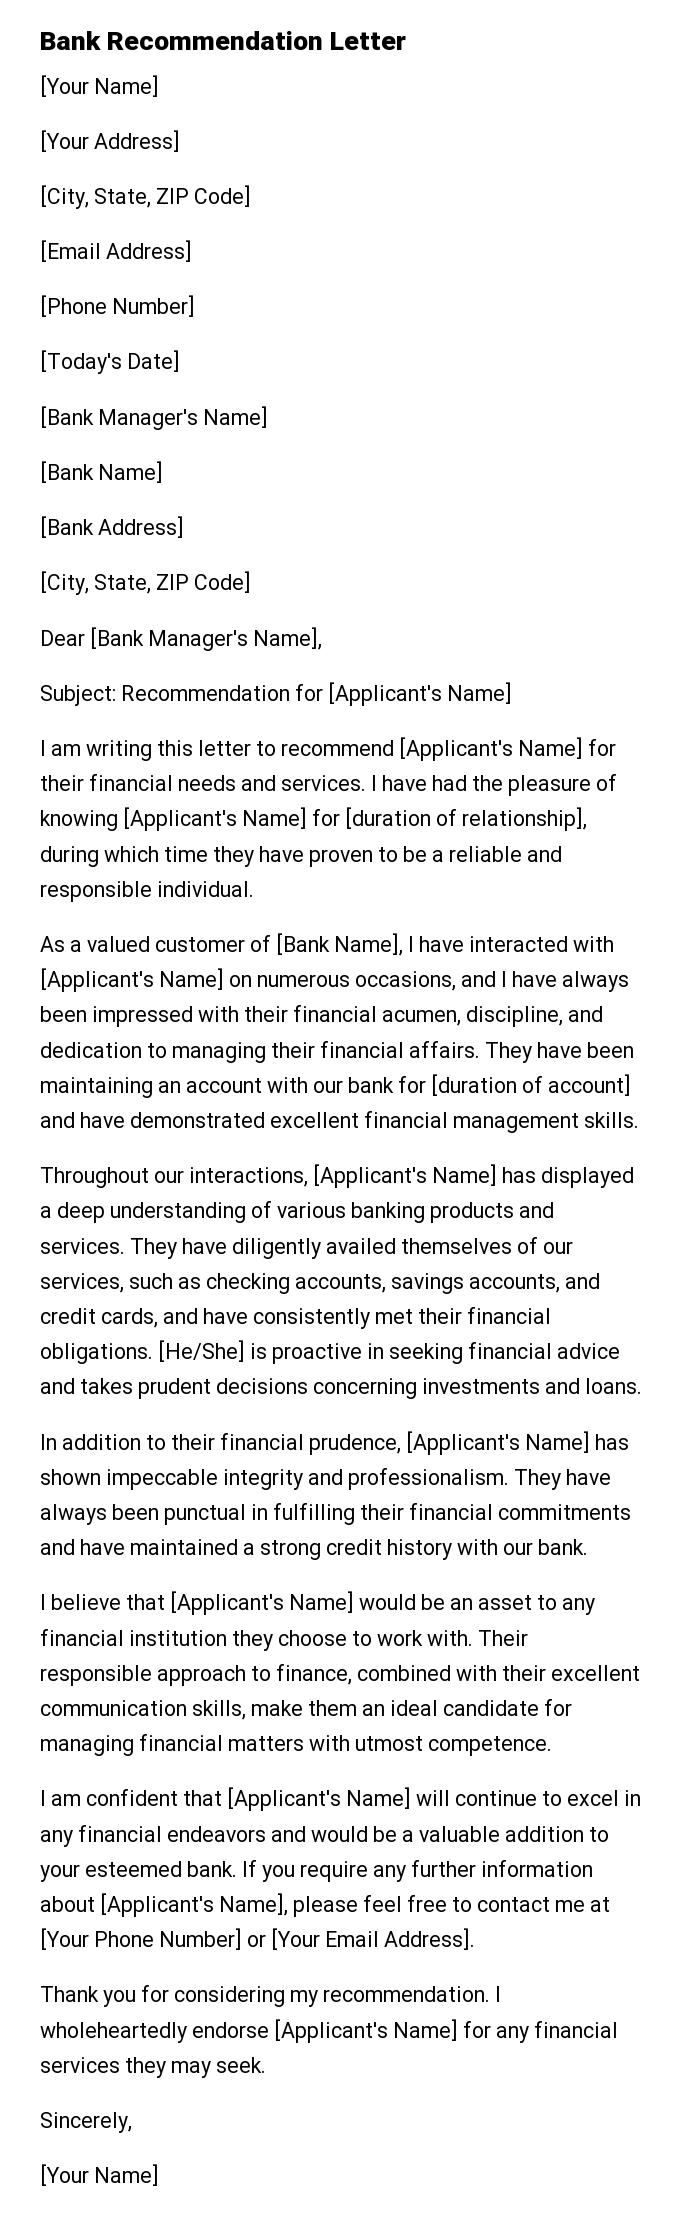 Bank Recommendation Letter